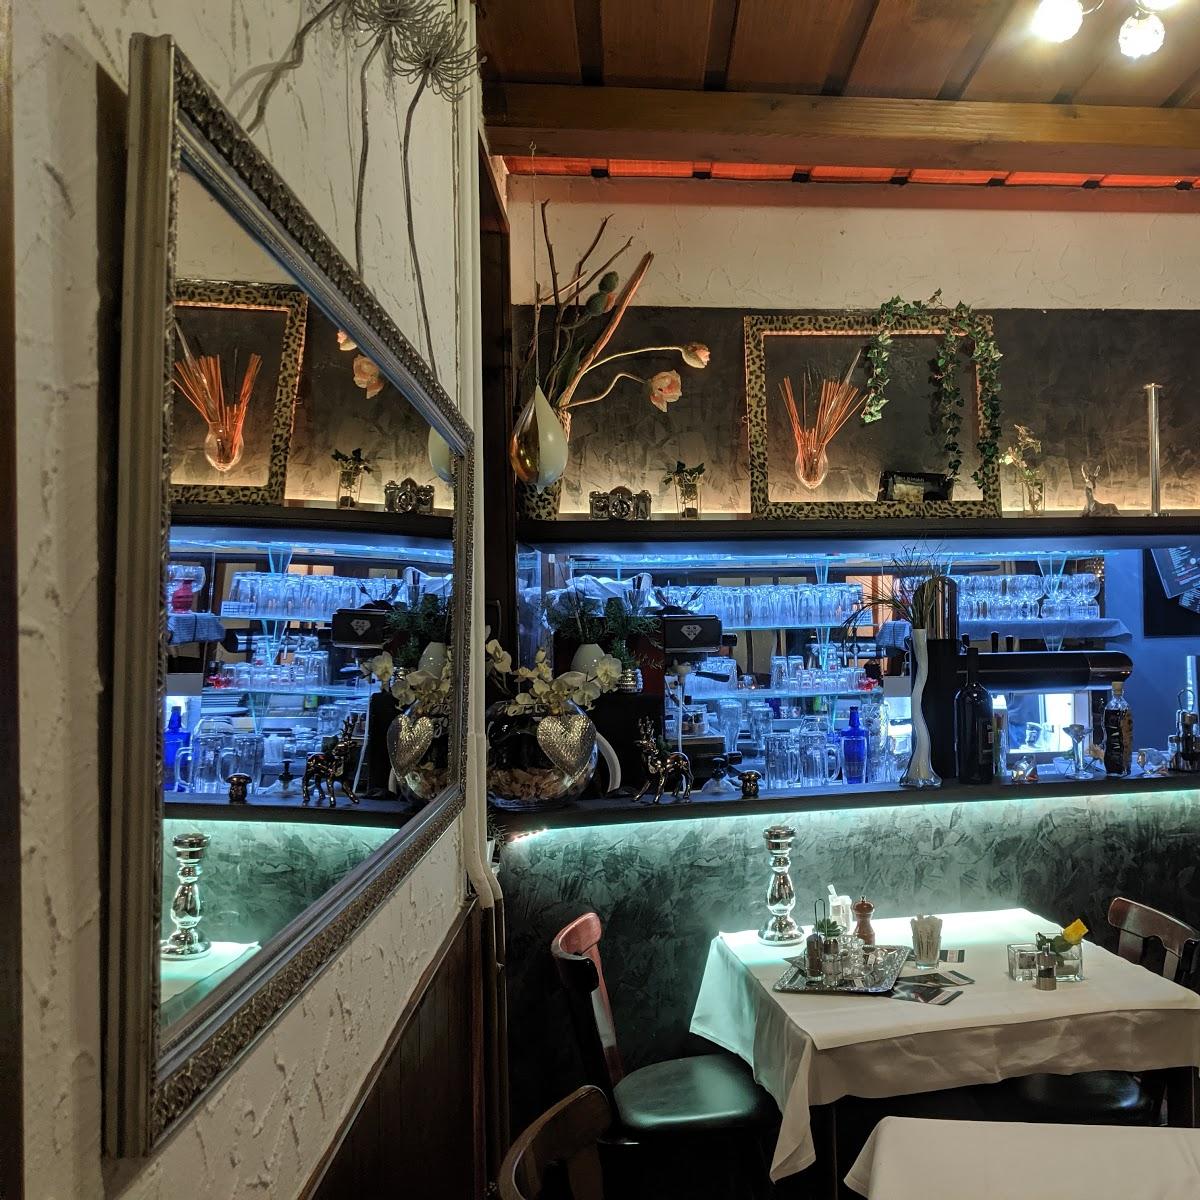 Restaurant "Ristorante Costa Smeralda" in  Balingen